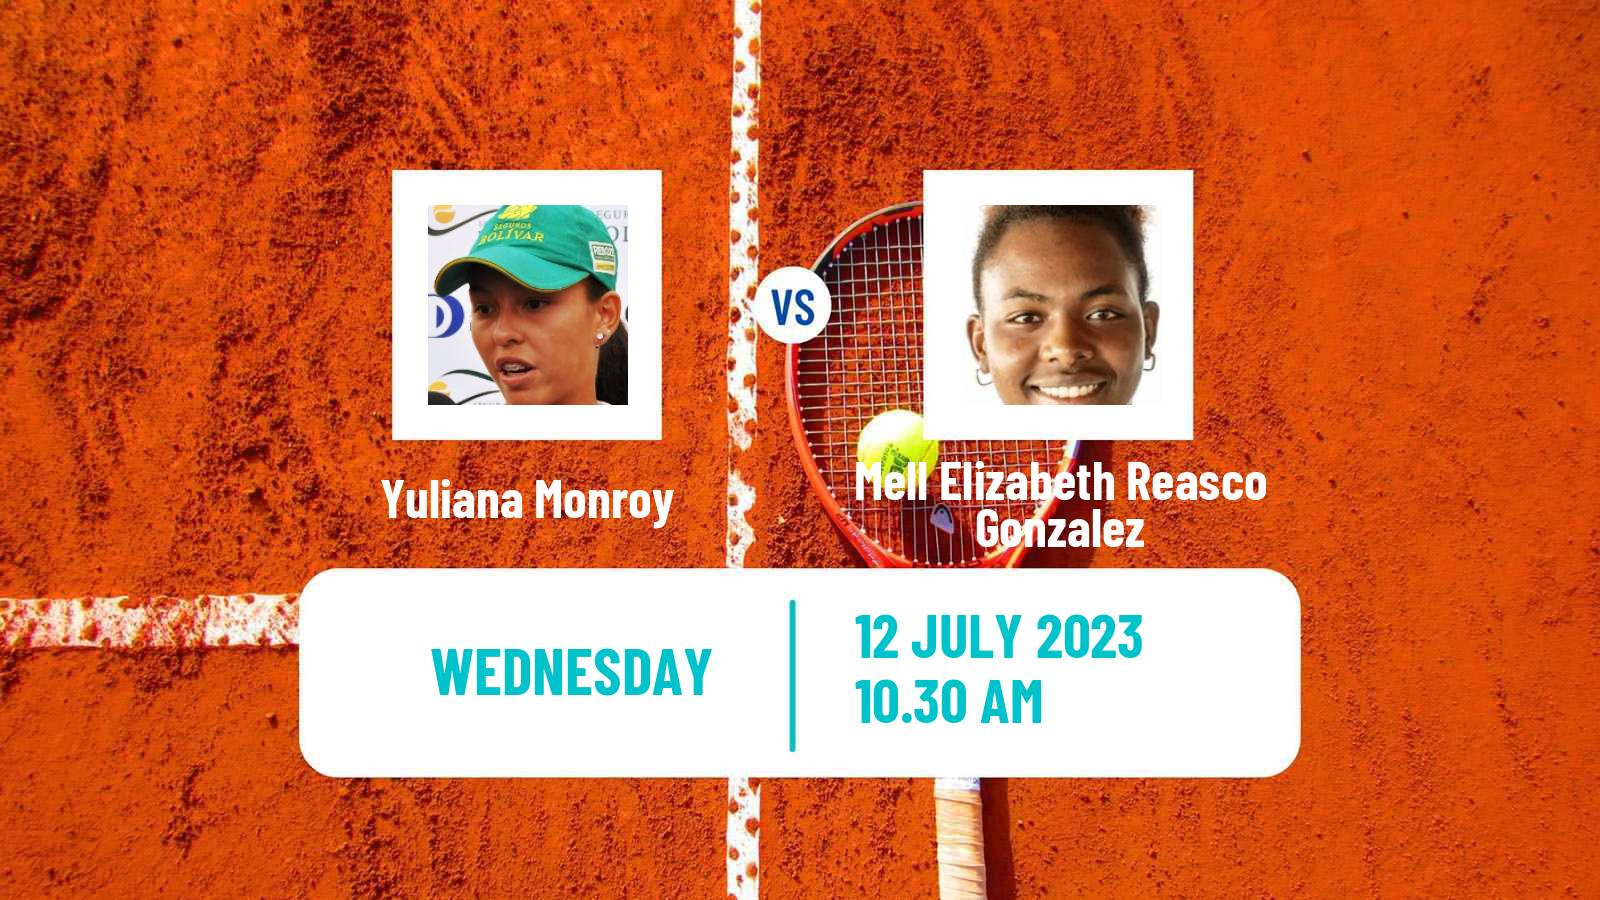 Tennis ITF W25 Punta Cana 2 Women Yuliana Monroy - Mell Elizabeth Reasco Gonzalez